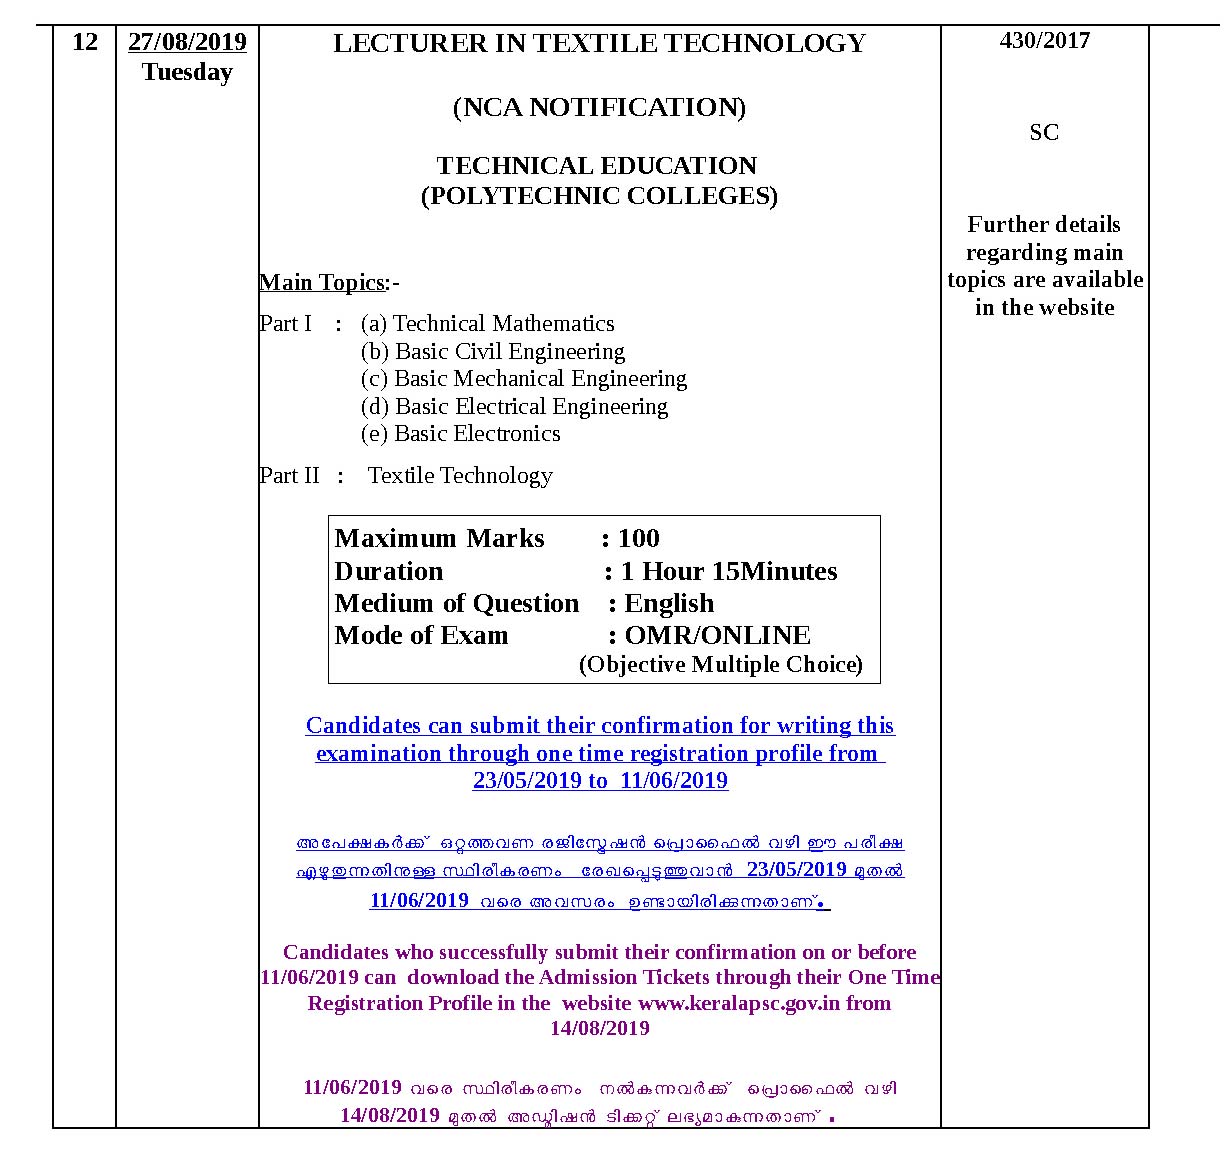 KPSC Examination Programme Of August 2019 - Notification Image 10